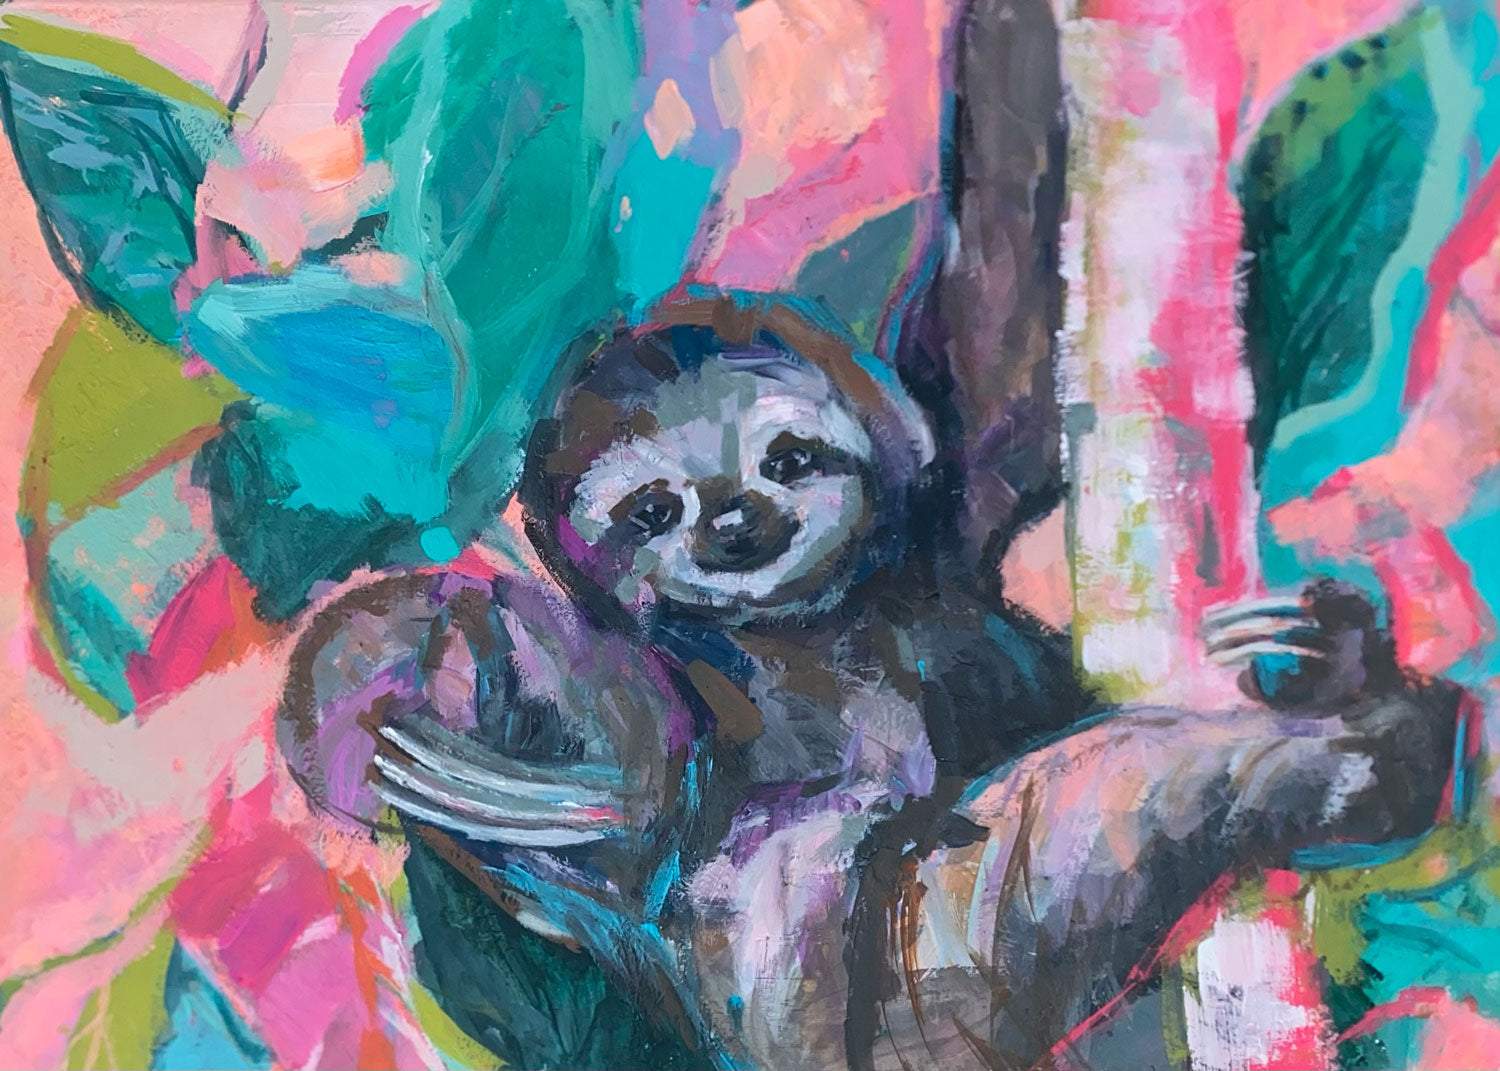 Sloth - Artist by Anissa Marie - Art Prints, Decoupage Rice Paper, Flat Canvas Prints, Giclee Prints, Photo Prints, Poster Prints